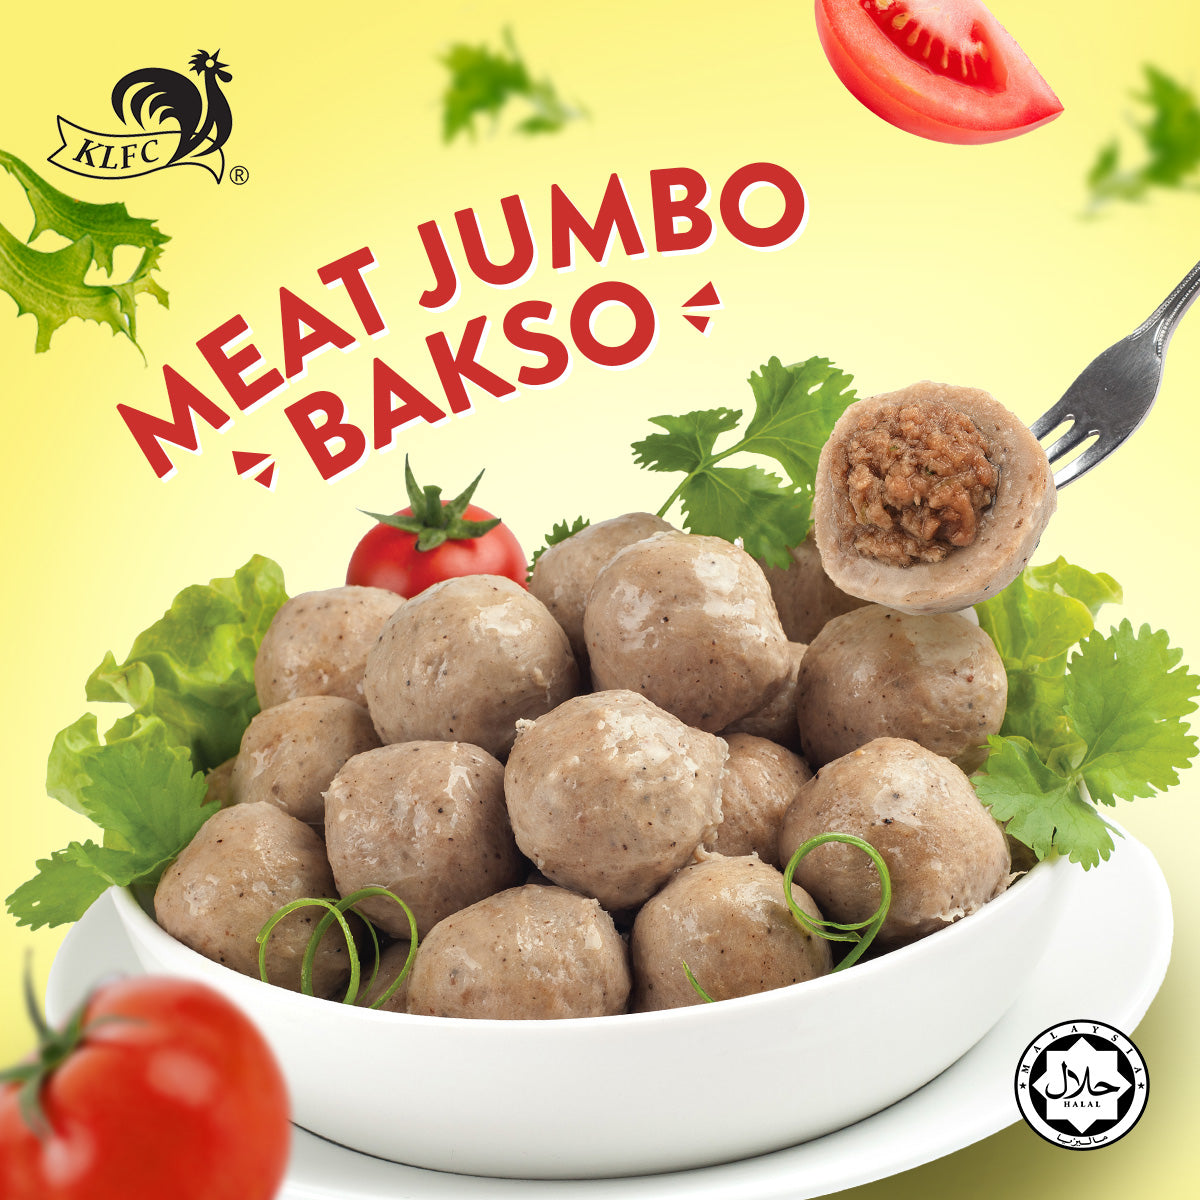 MEAT JUMBO BAKSO 500G